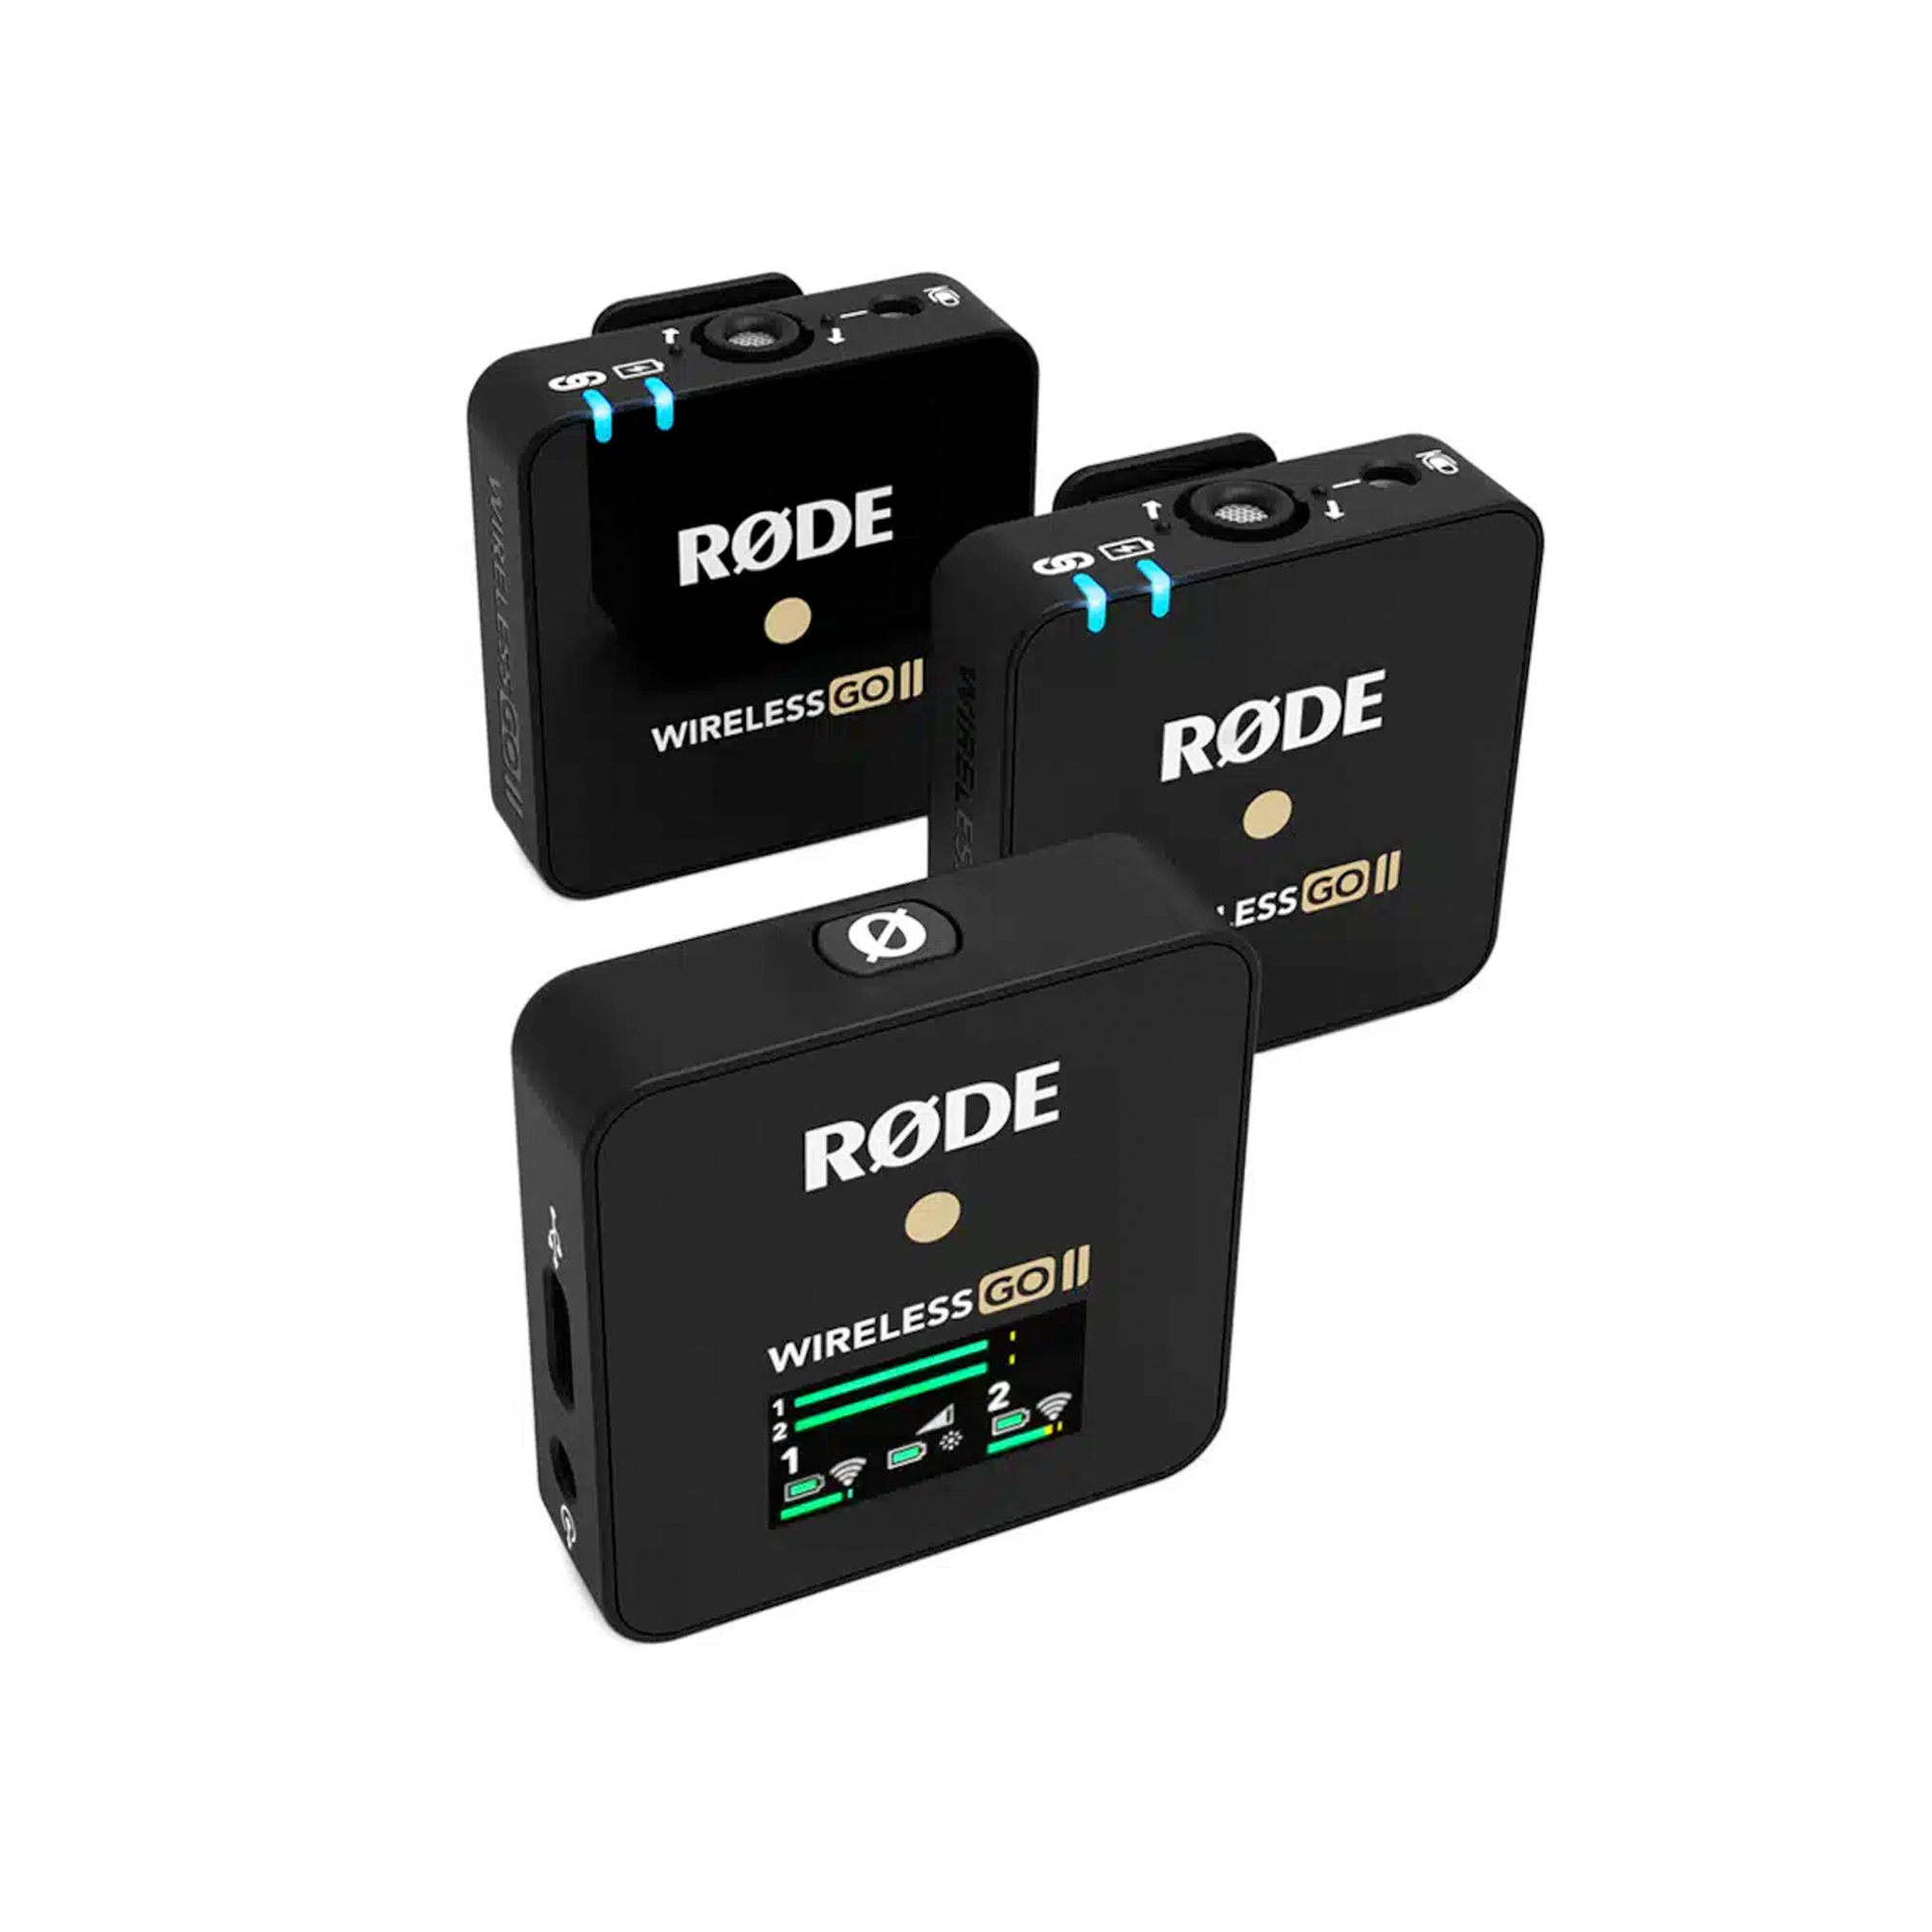 Rode Wireless Go II – Dual-Channel Wireless Microphone System